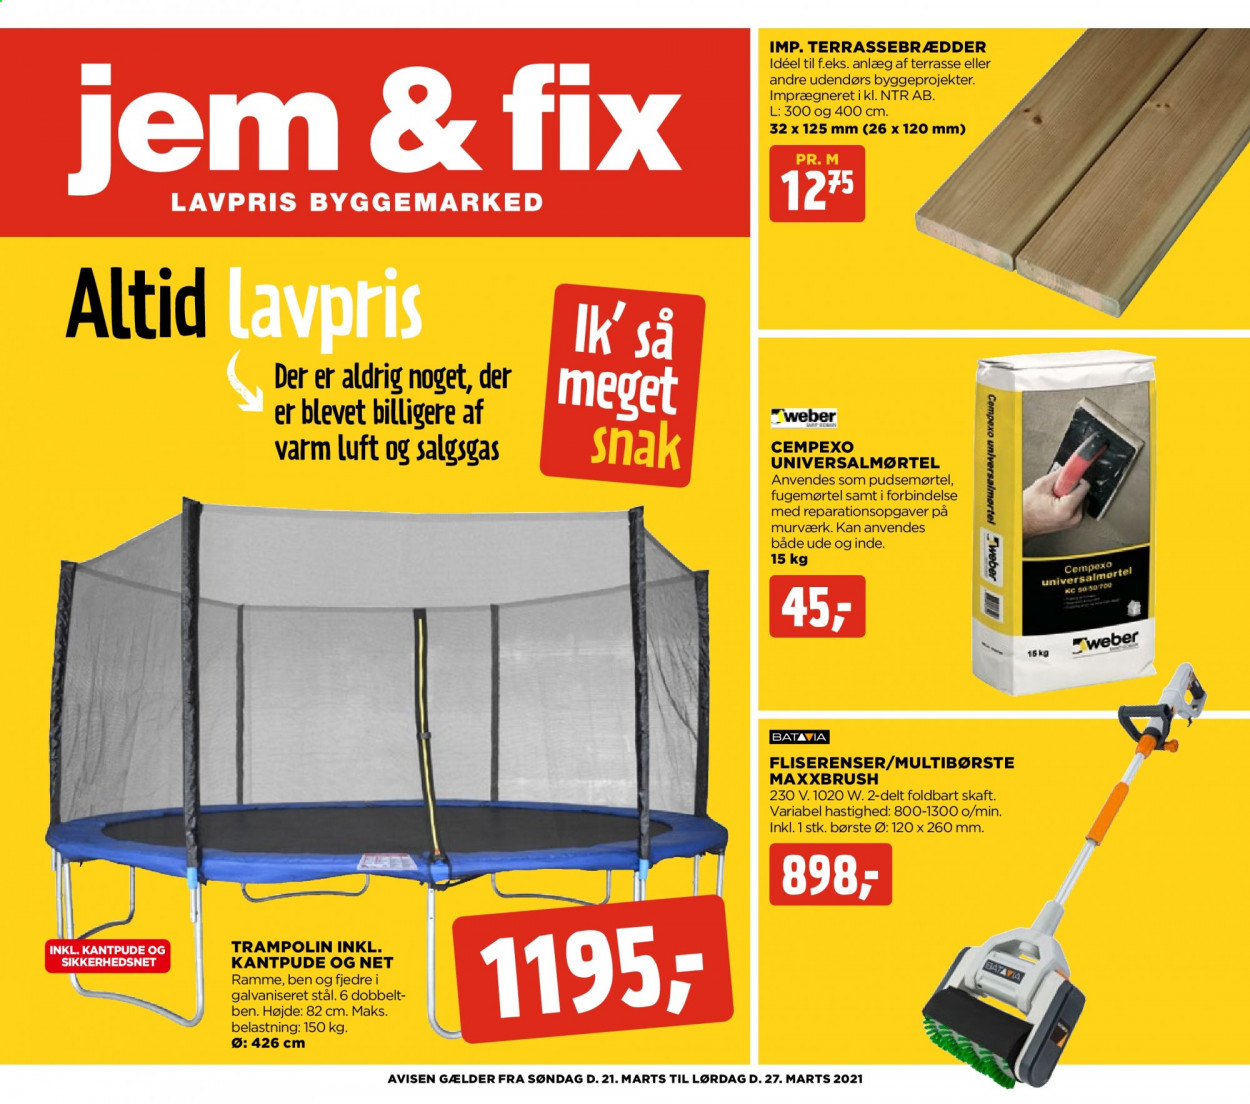 thumbnail - Jem & Fix tilbud  - 21.3.2021 - 27.3.2021 - tilbudsprodukter - trampolin, terrassebrædder, børste. Side 1.